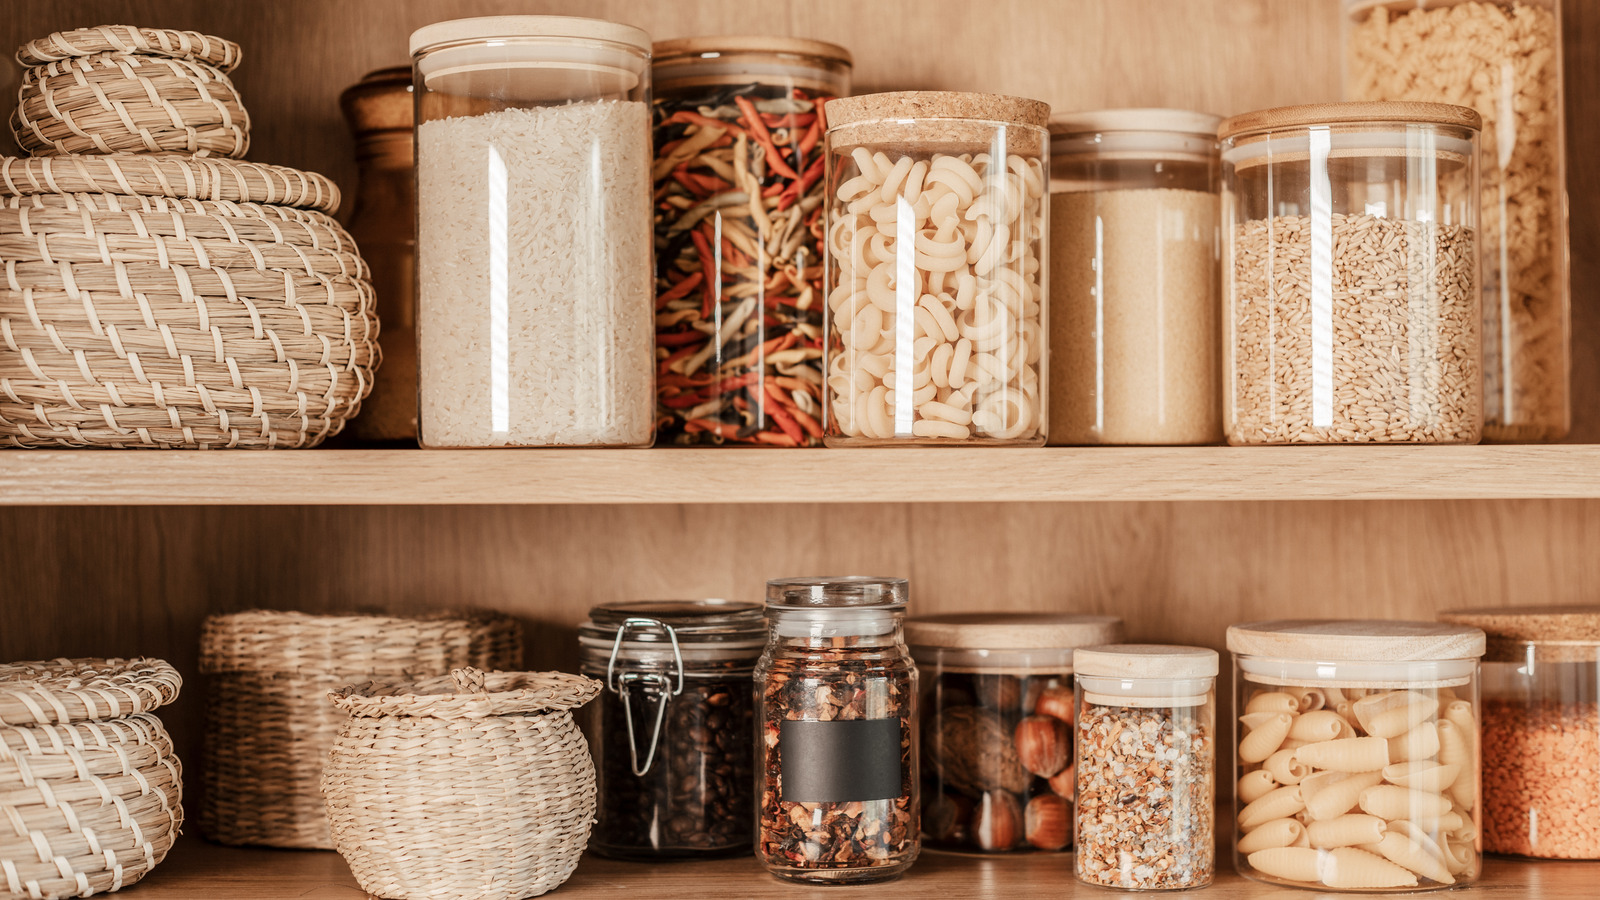 28 Pantry Shelving Ideas to Organize Your Stockpile